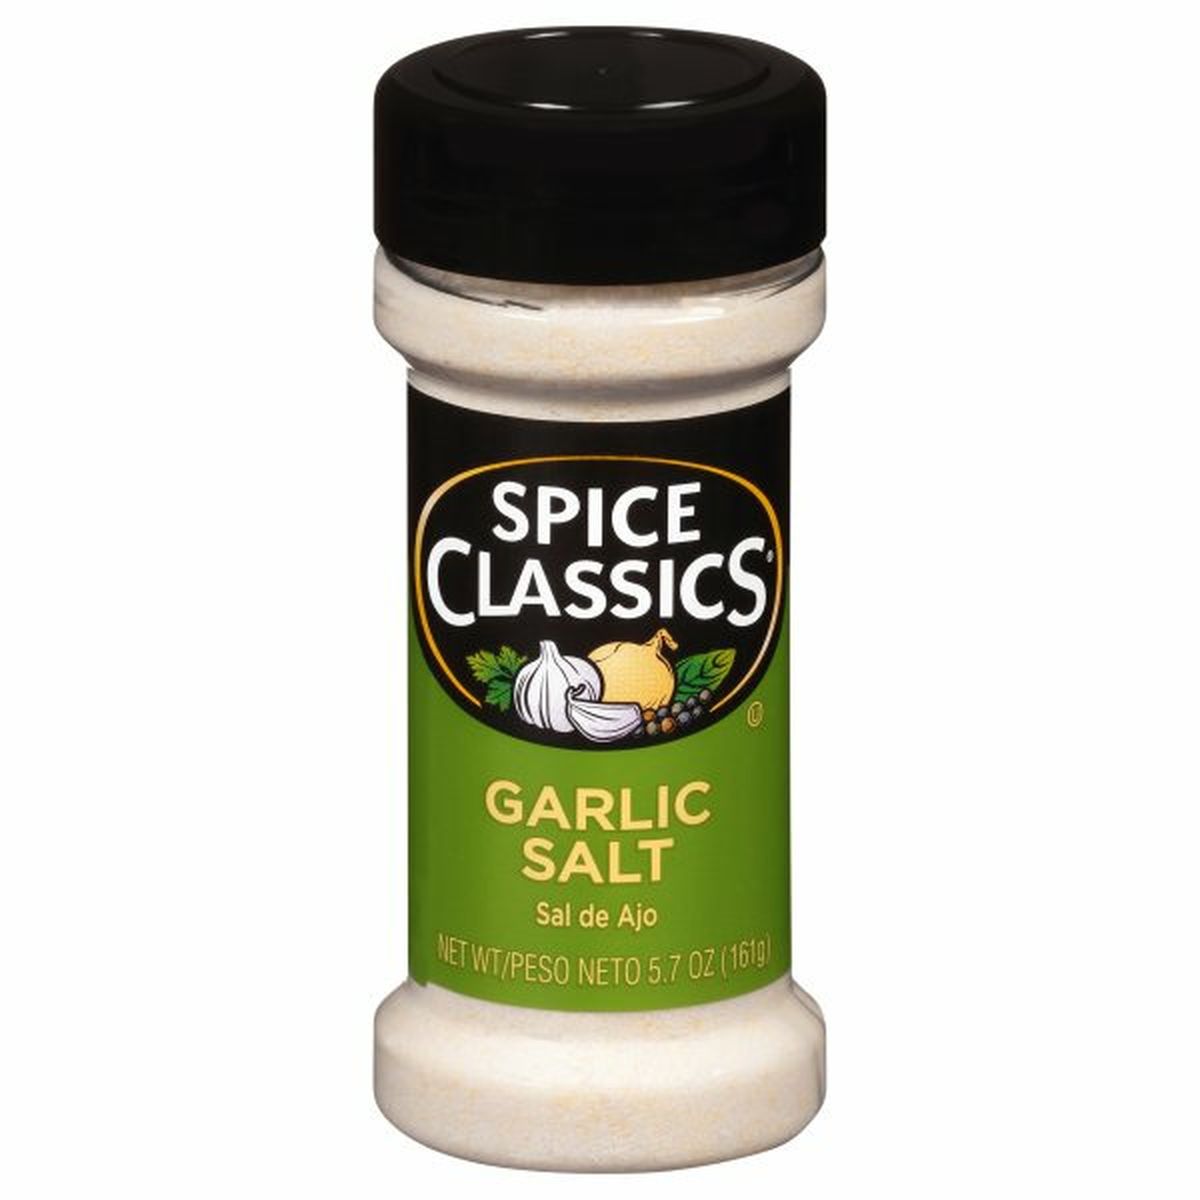 Calories in Spice Classicss Garlic Salt